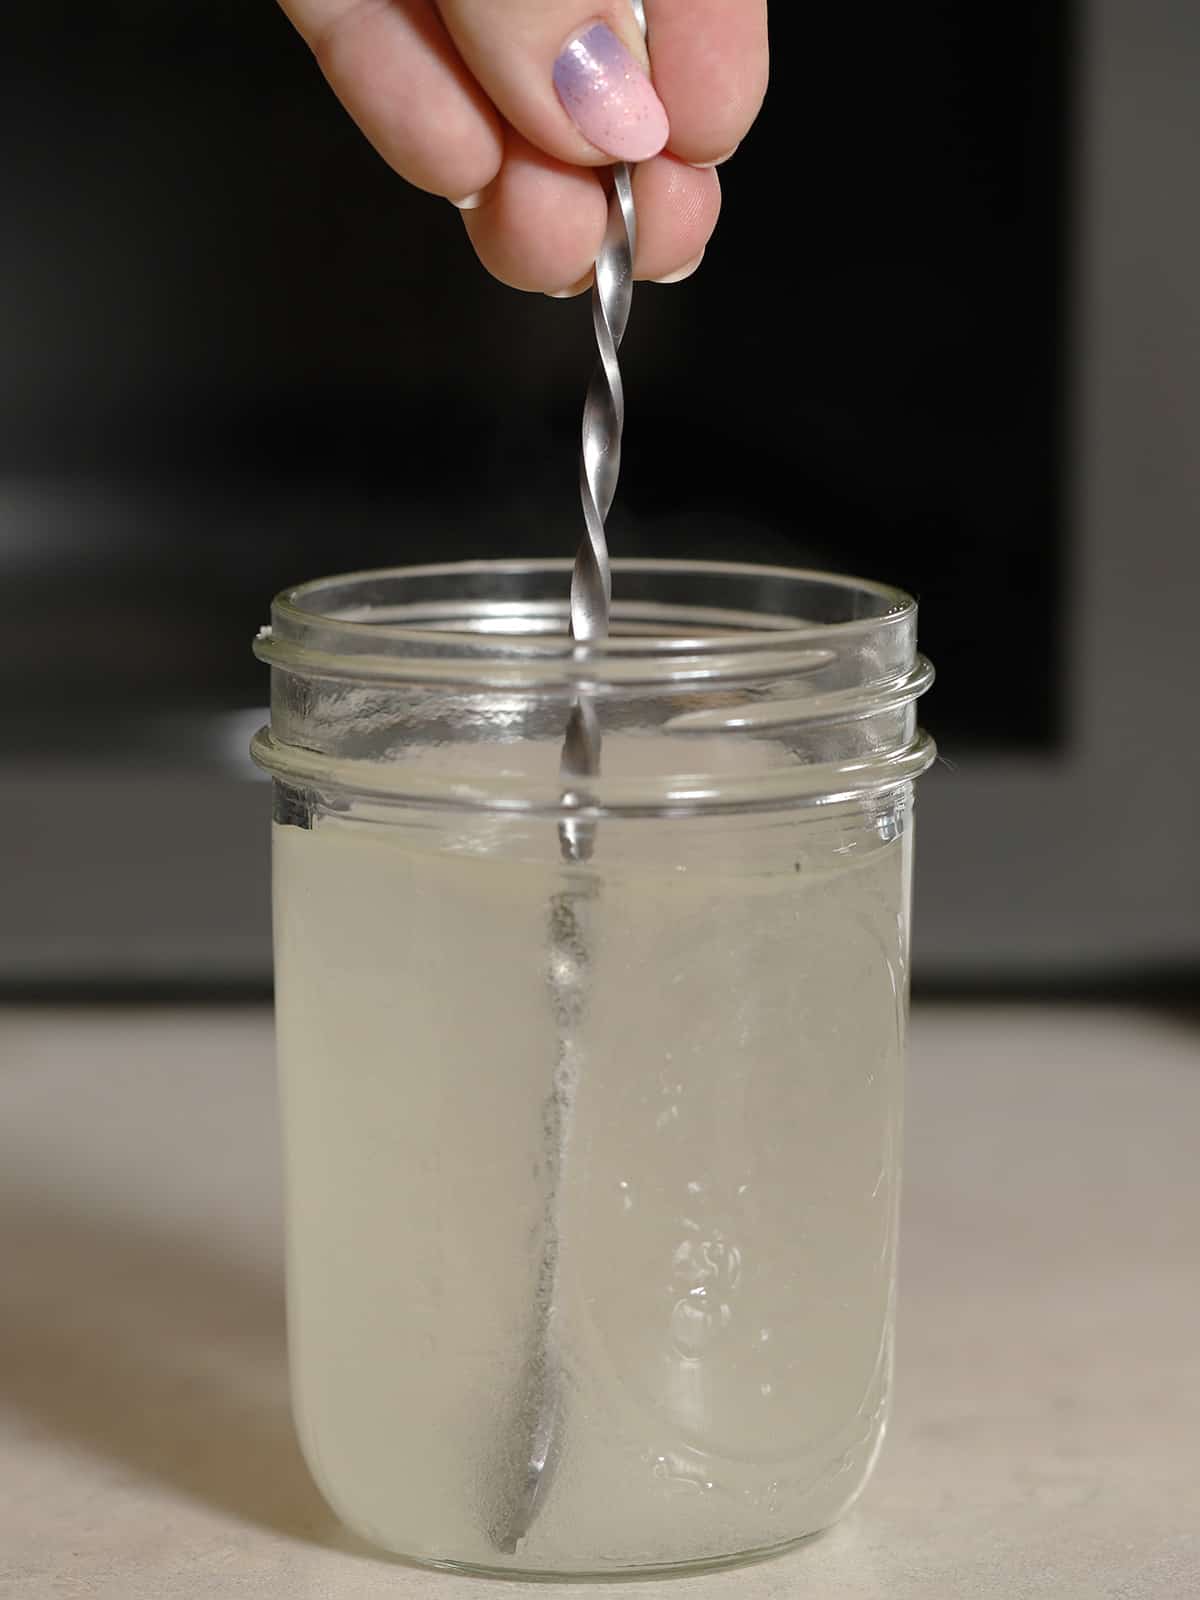 A hand stirring a jar of simple syrup. 